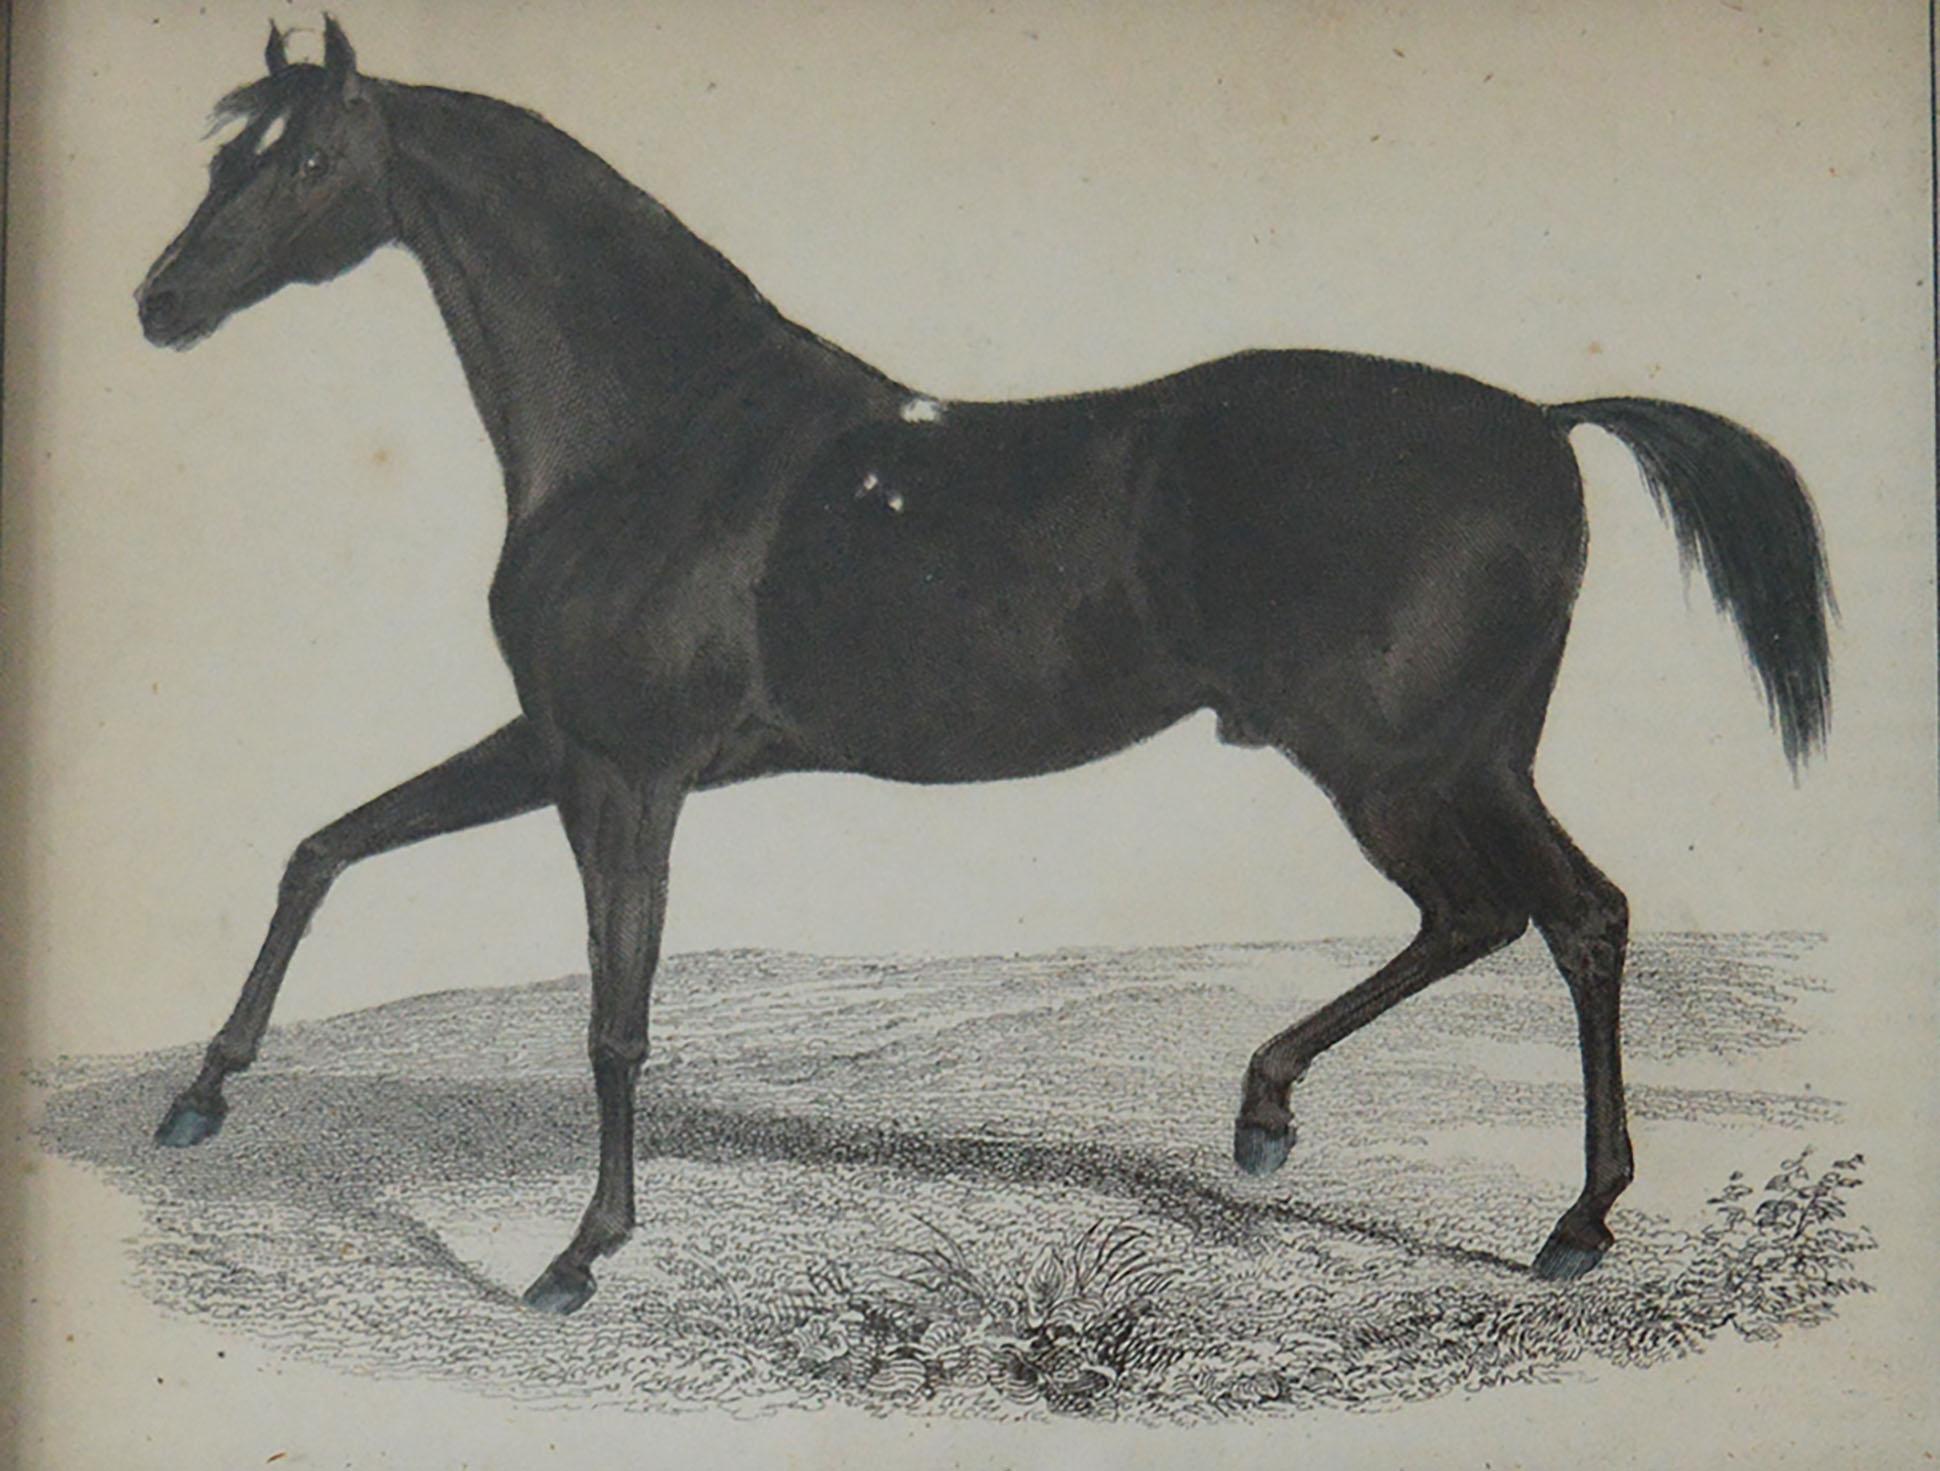 Folk Art Original Antique Print of a Horse, 1847